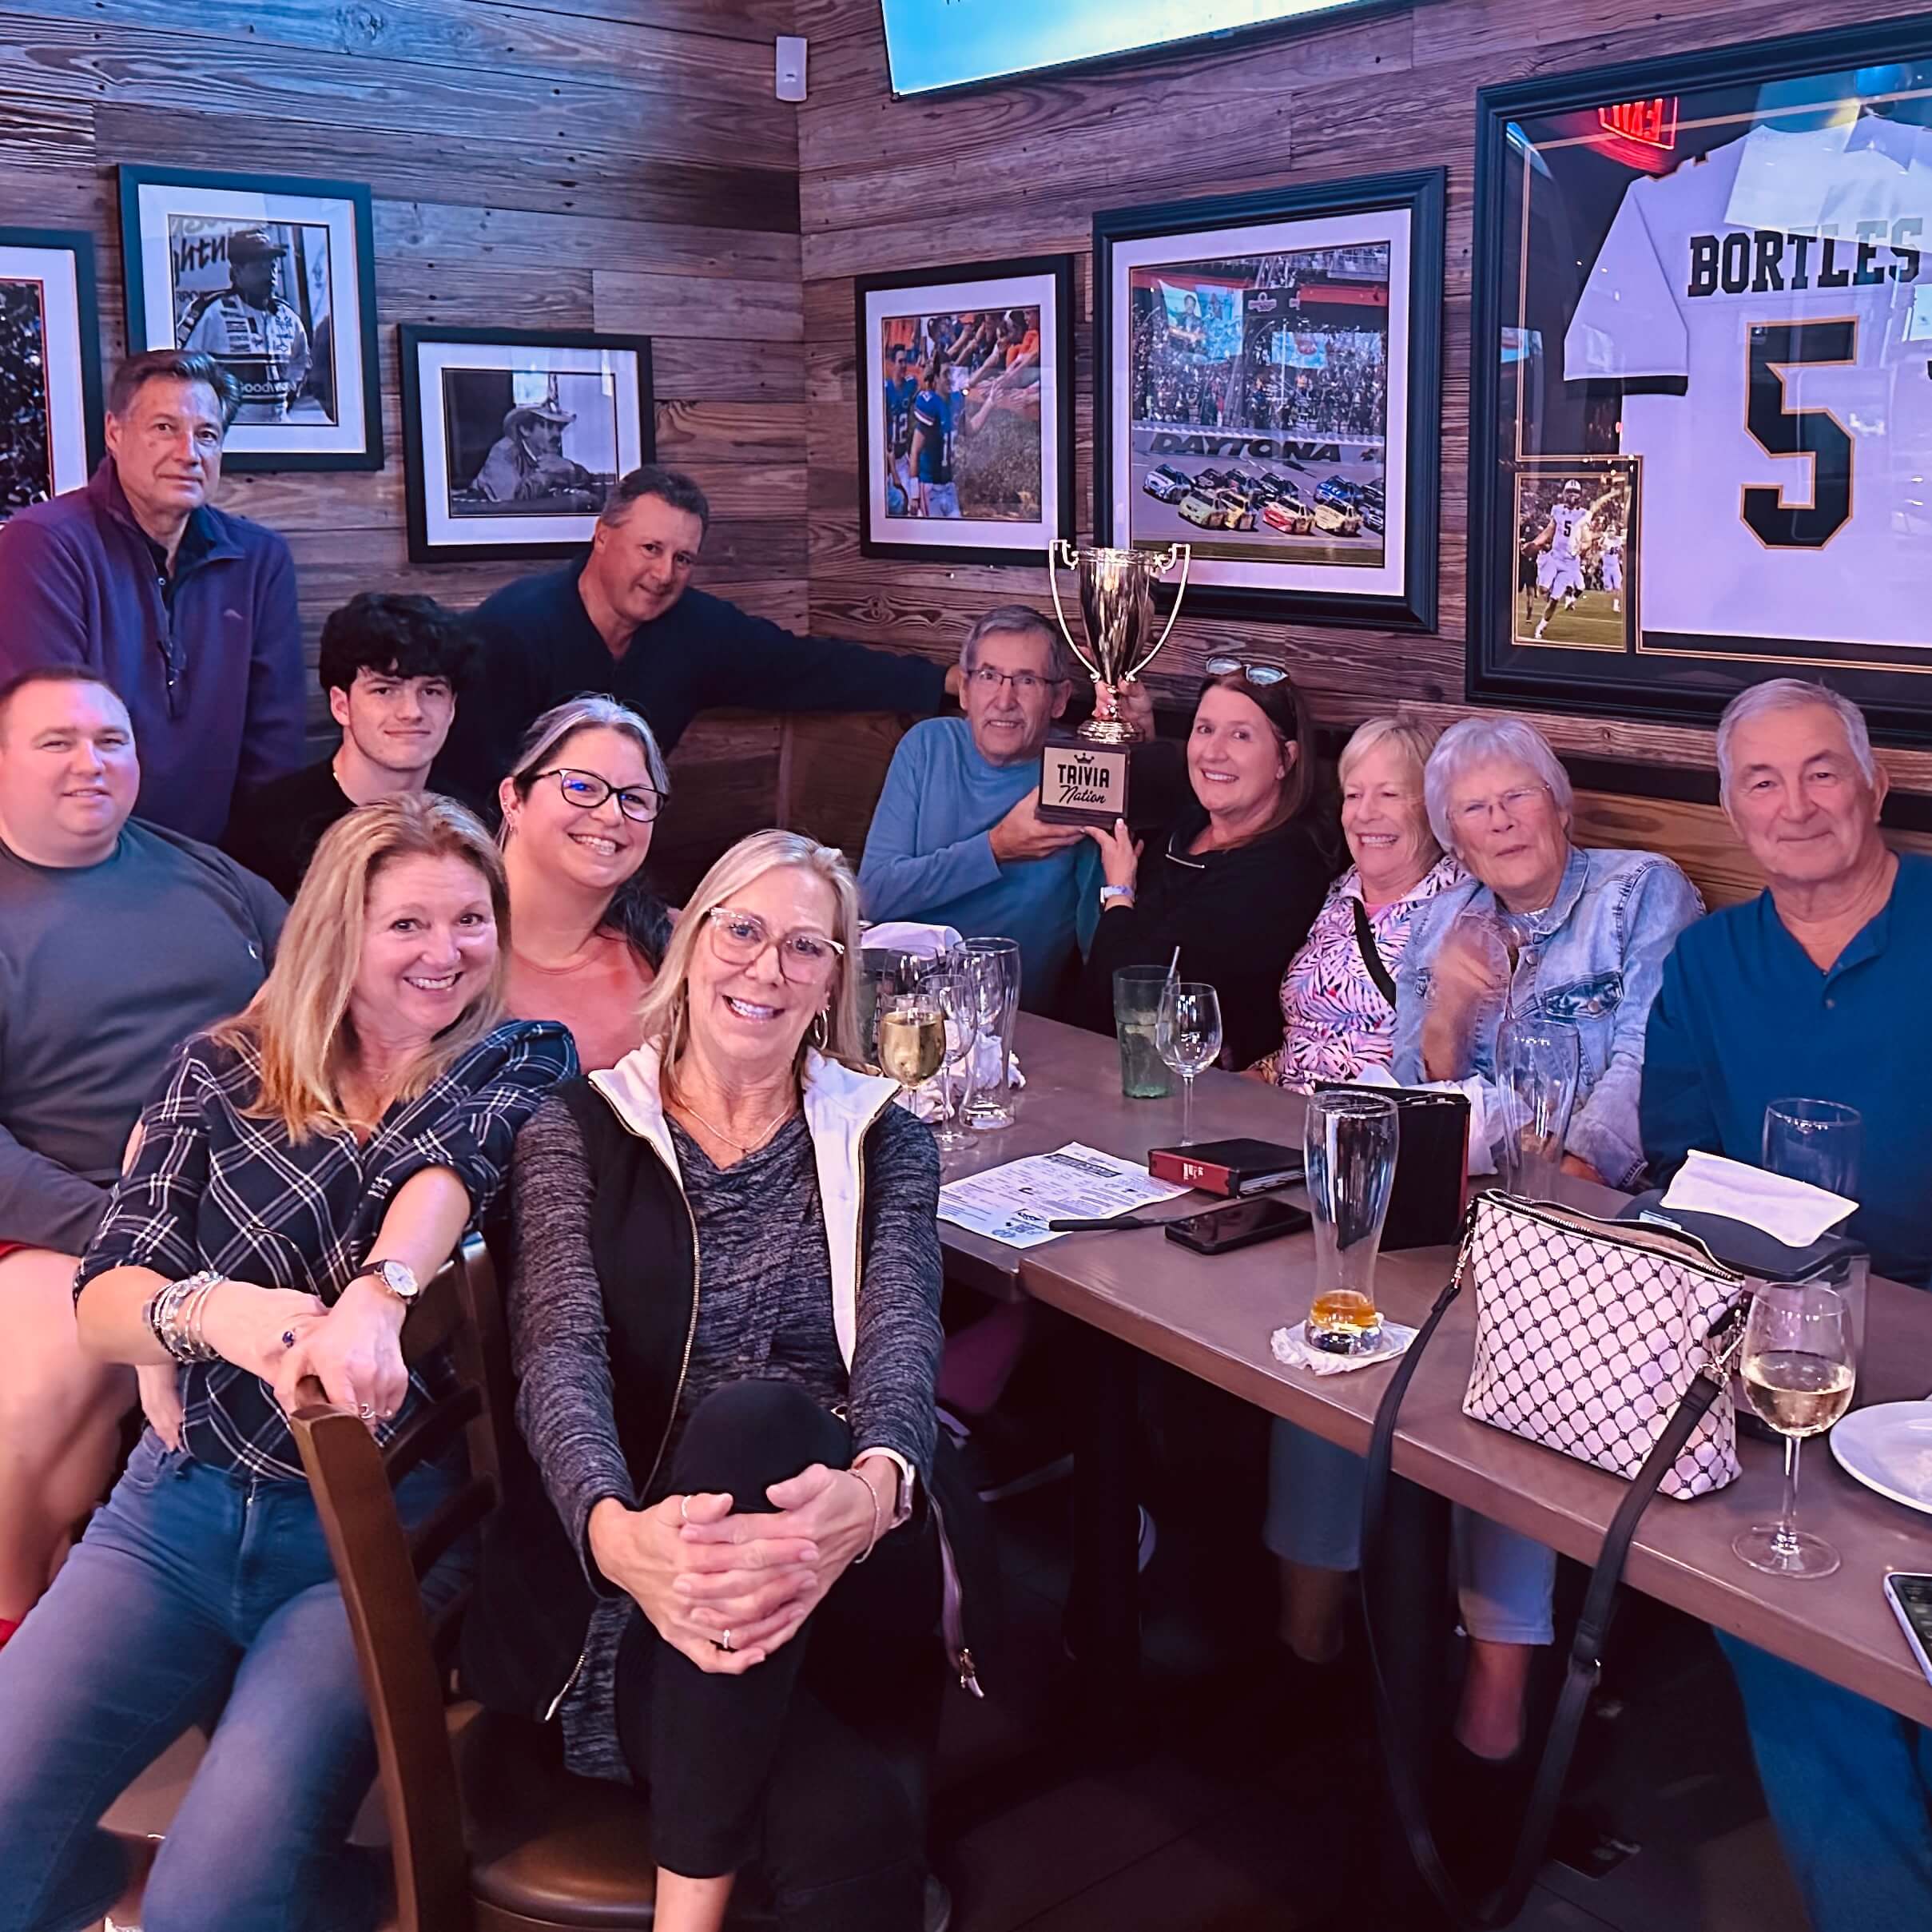 Miller's Ale House Daytona Beach FL 32117 trivia night 8